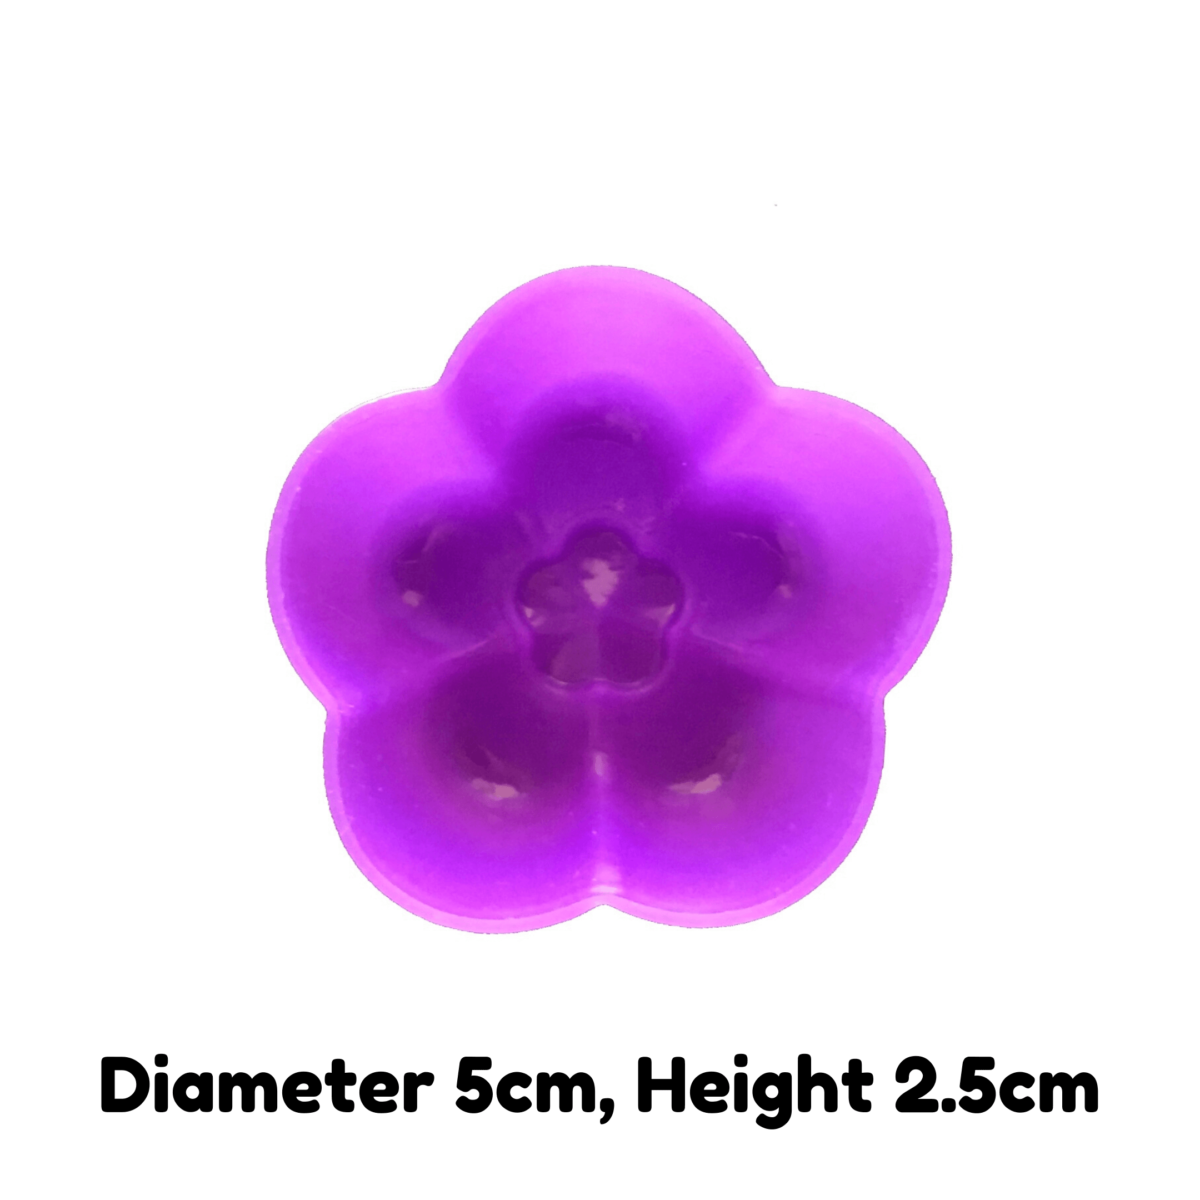 written dimensions of 5cm purple plum blossom single cavity silicone mould